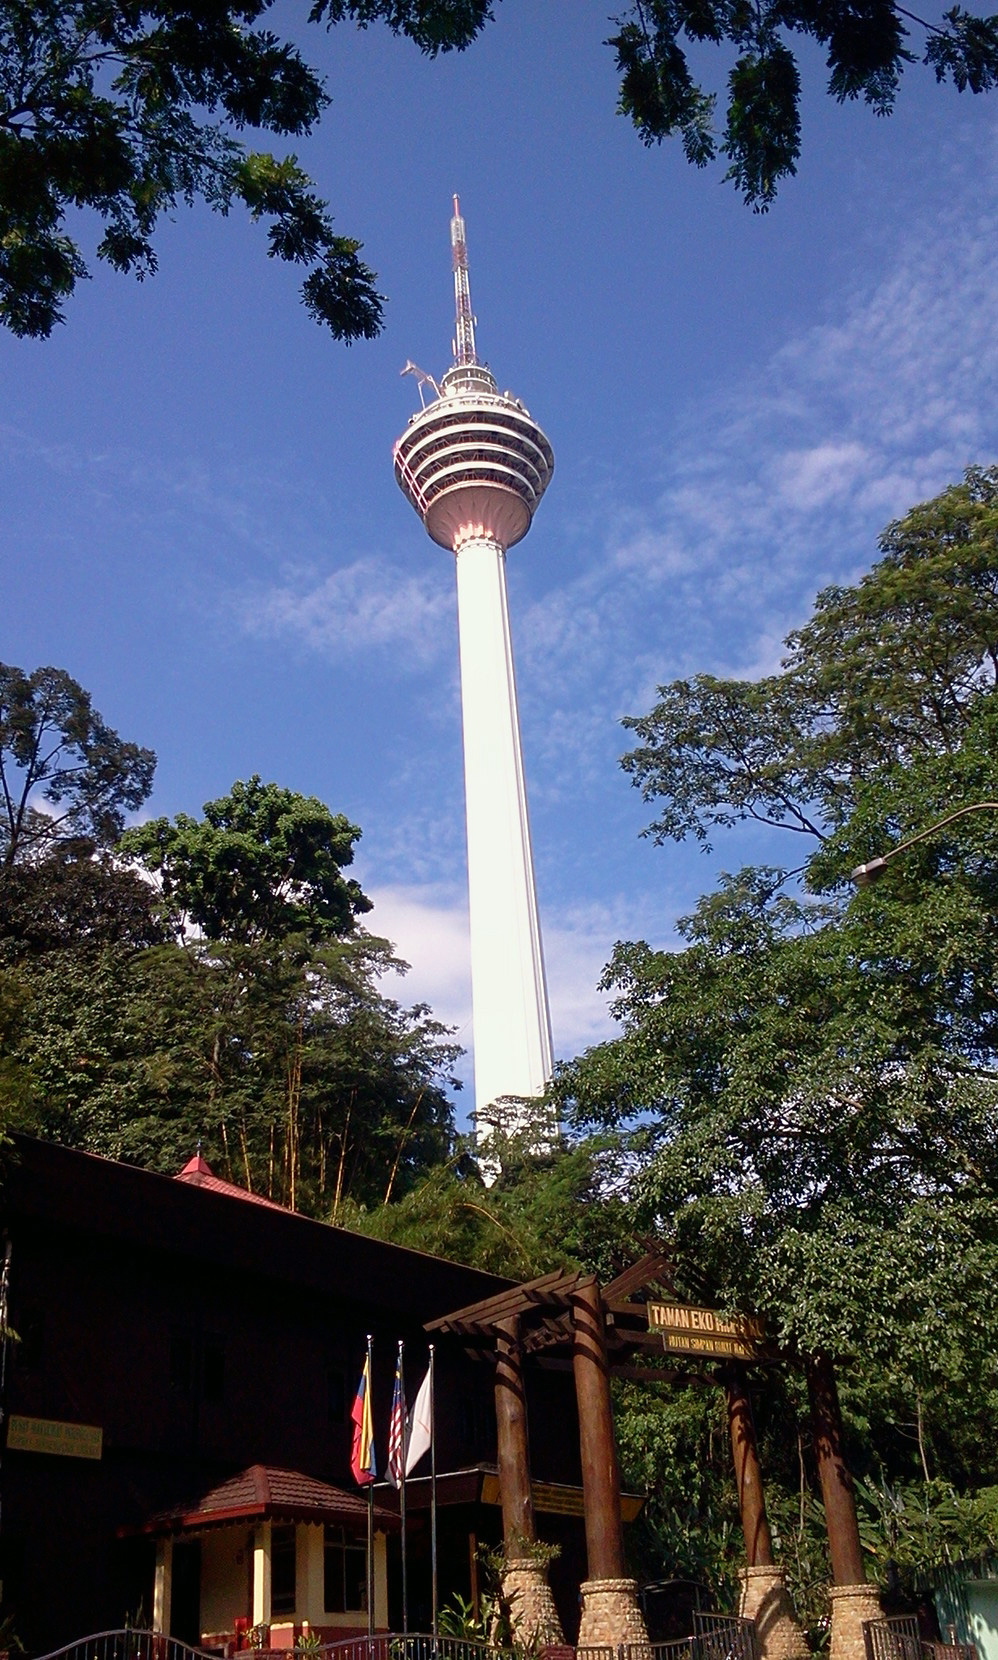 KL Tower, Menara Kuala Lumpur, features an antenna that reaches 421